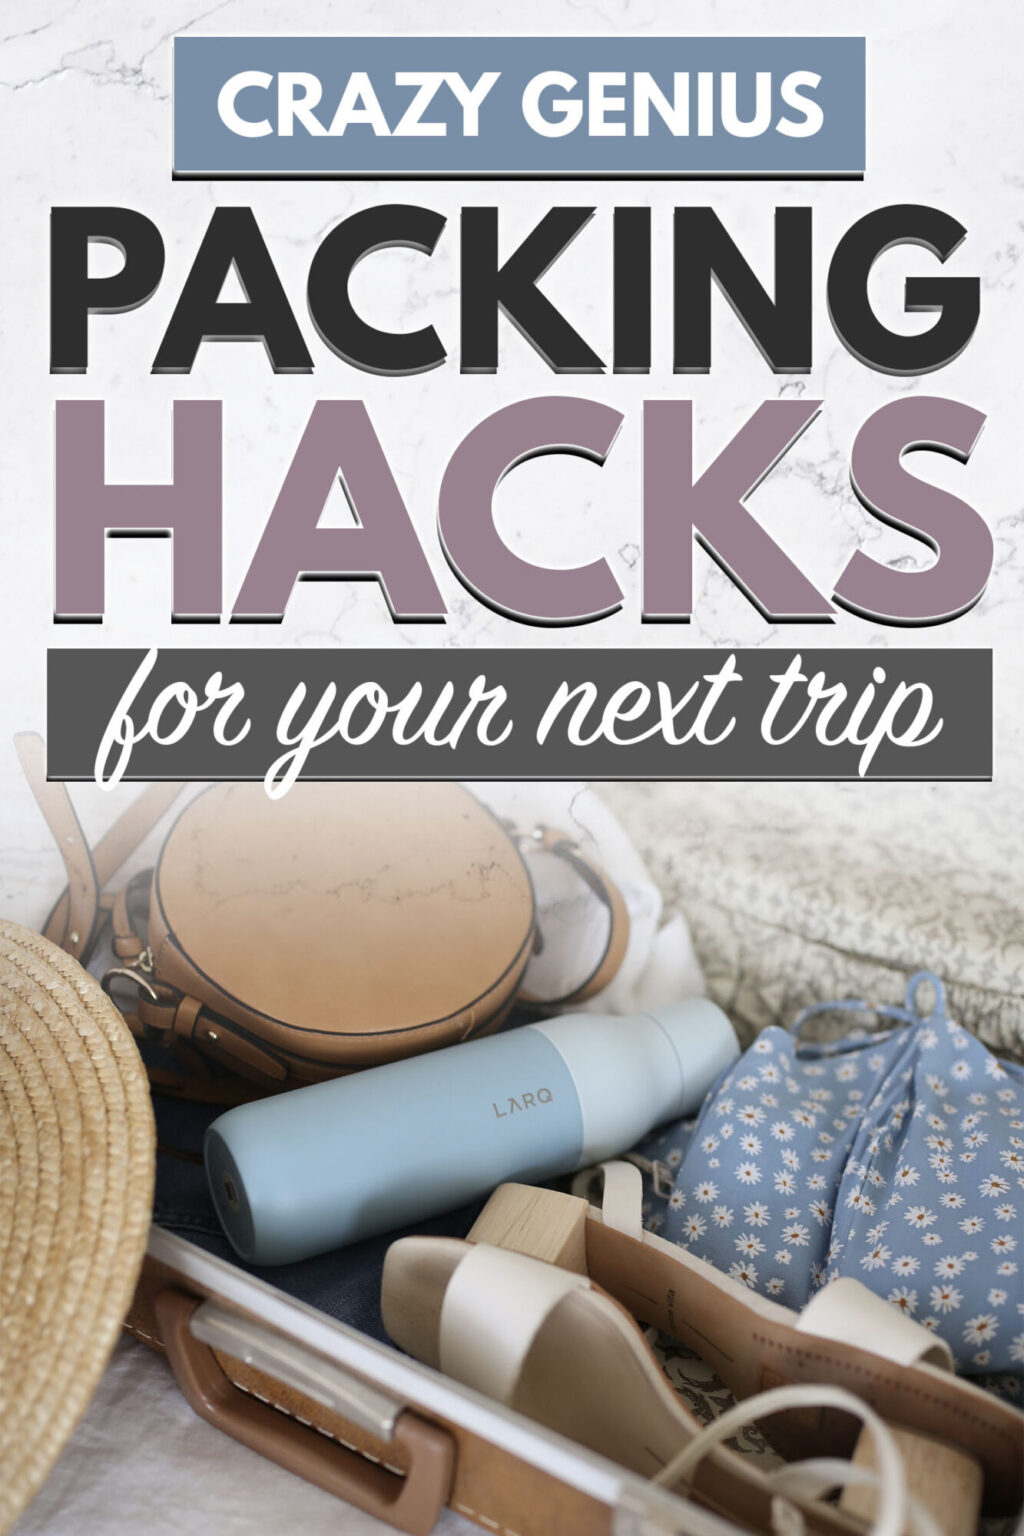 tips travel hack